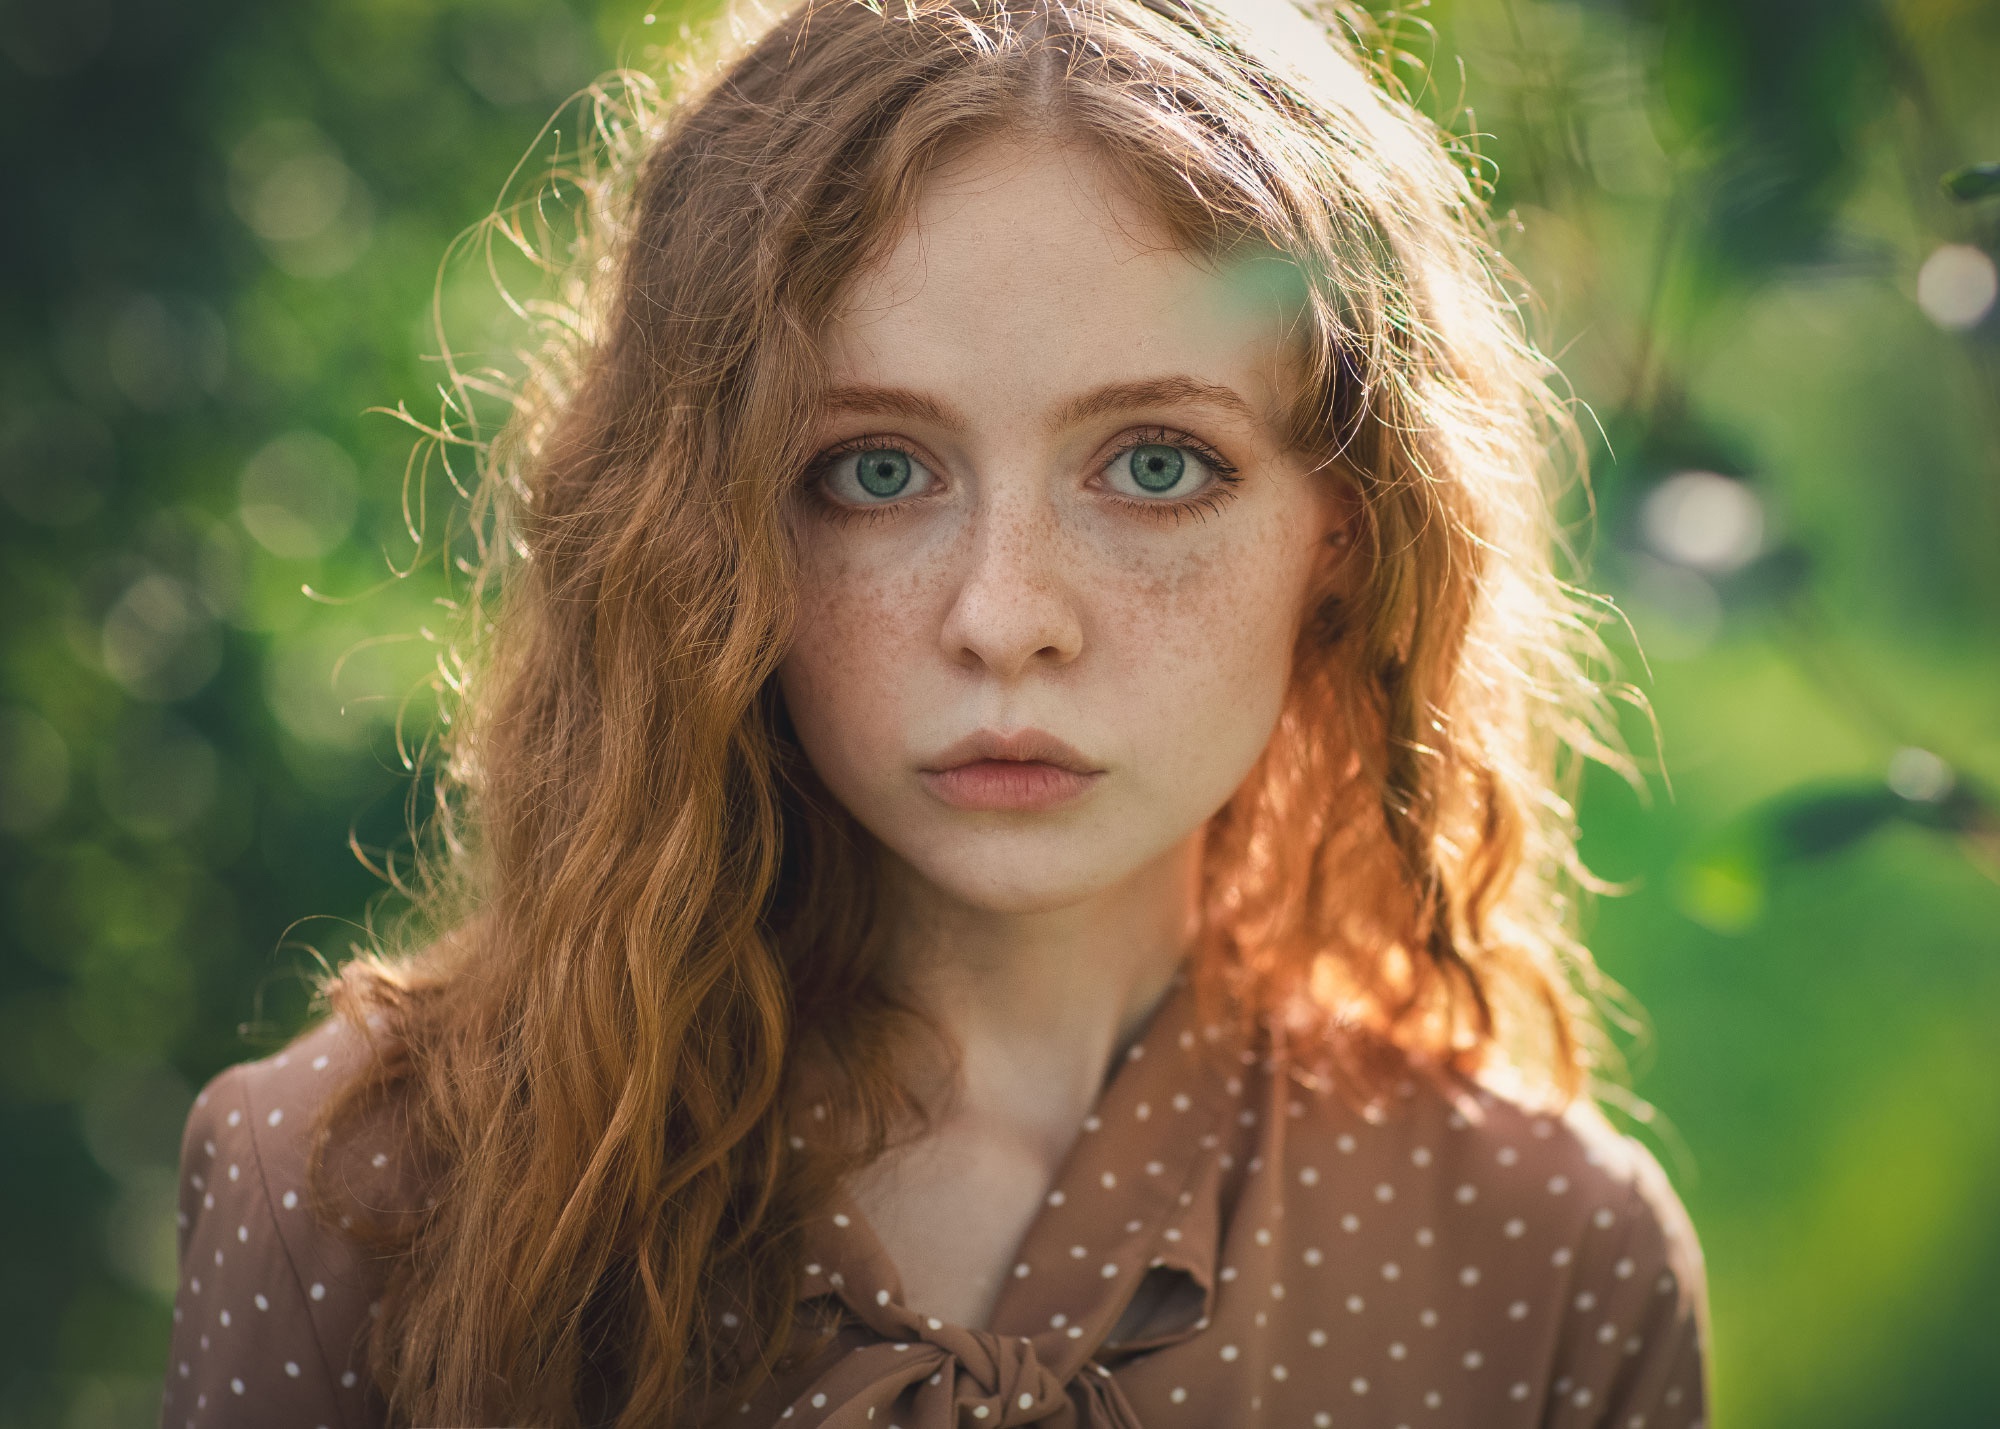 Download Freckles Blue Eyes Redhead Woman Model Hd Wallpaper By Yuriy Korotun 